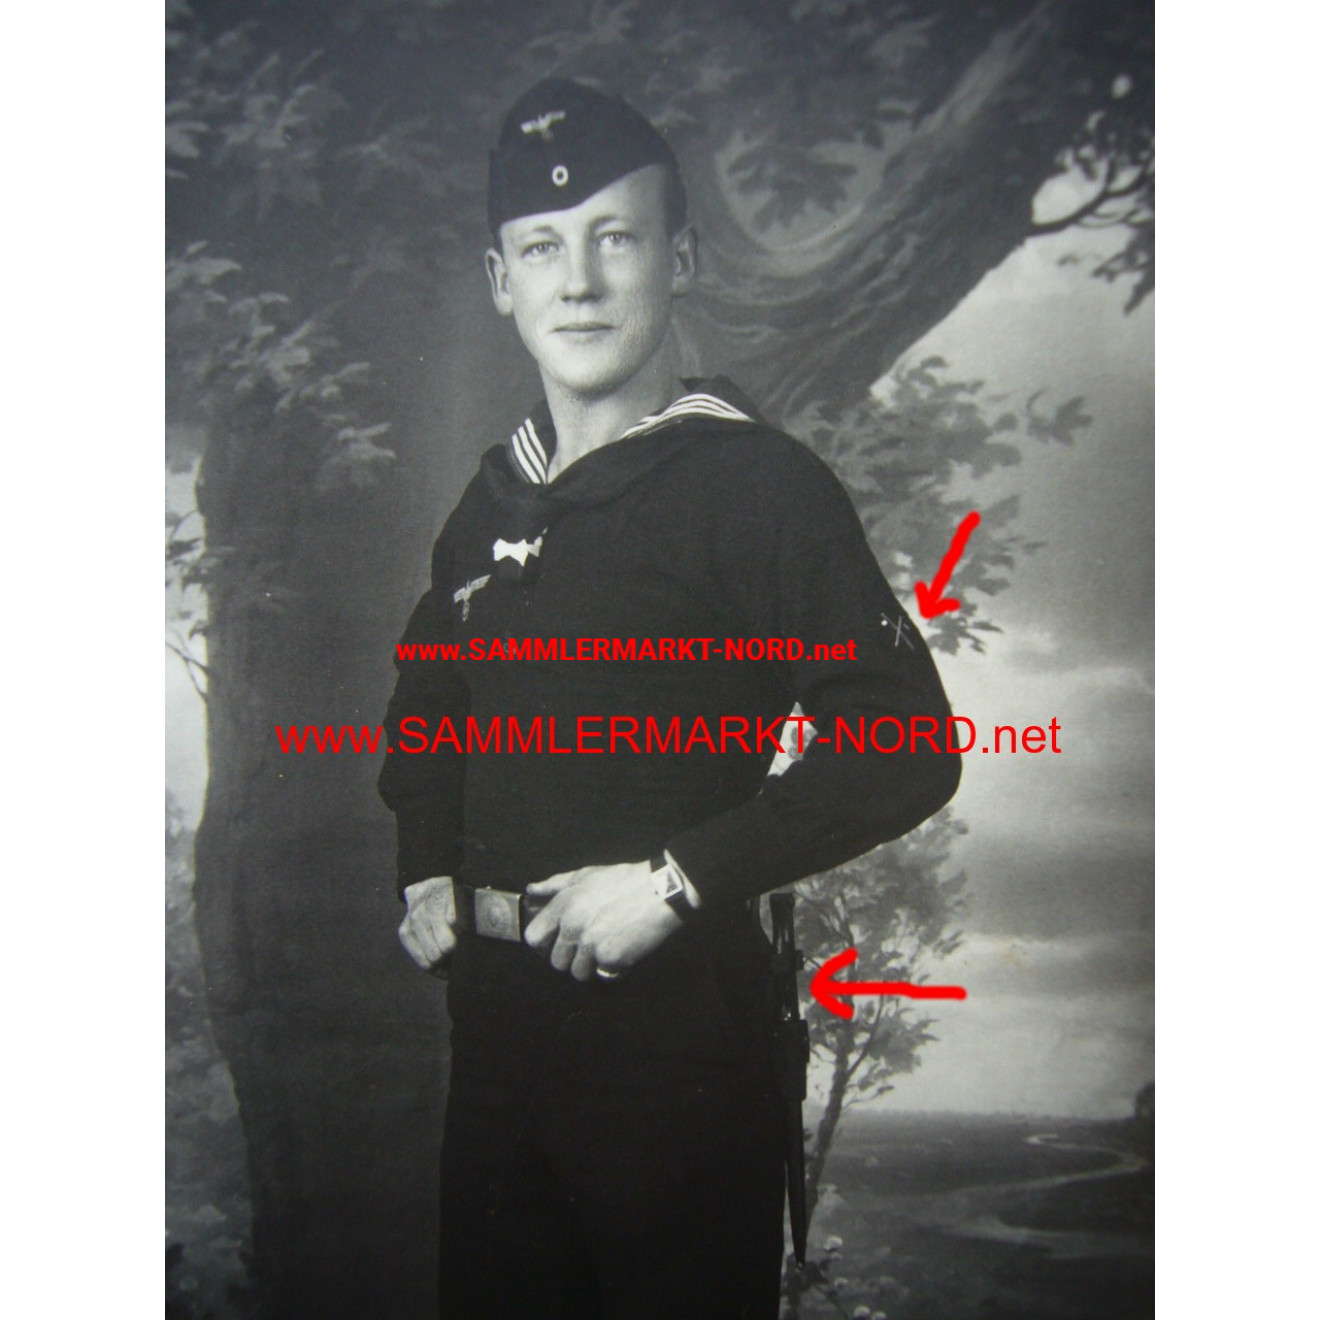 Kriegsmarine sailor with bayonet